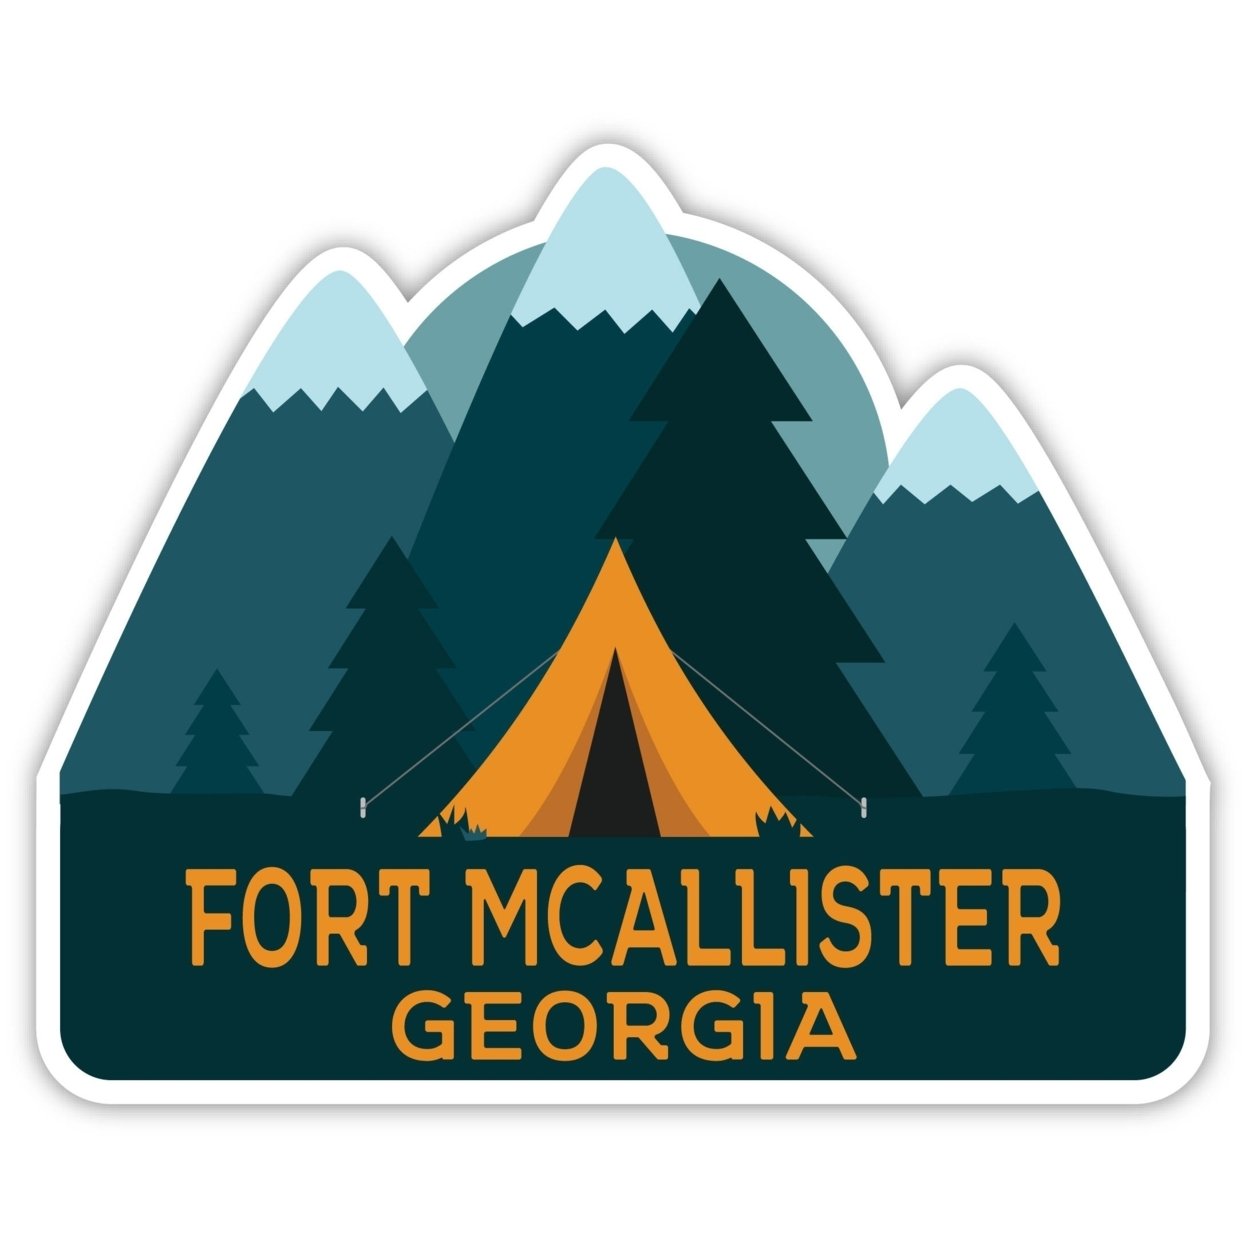 Fort McAllister Georgia Souvenir Decorative Stickers (Choose Theme And Size) - Single Unit, 10-Inch, Tent